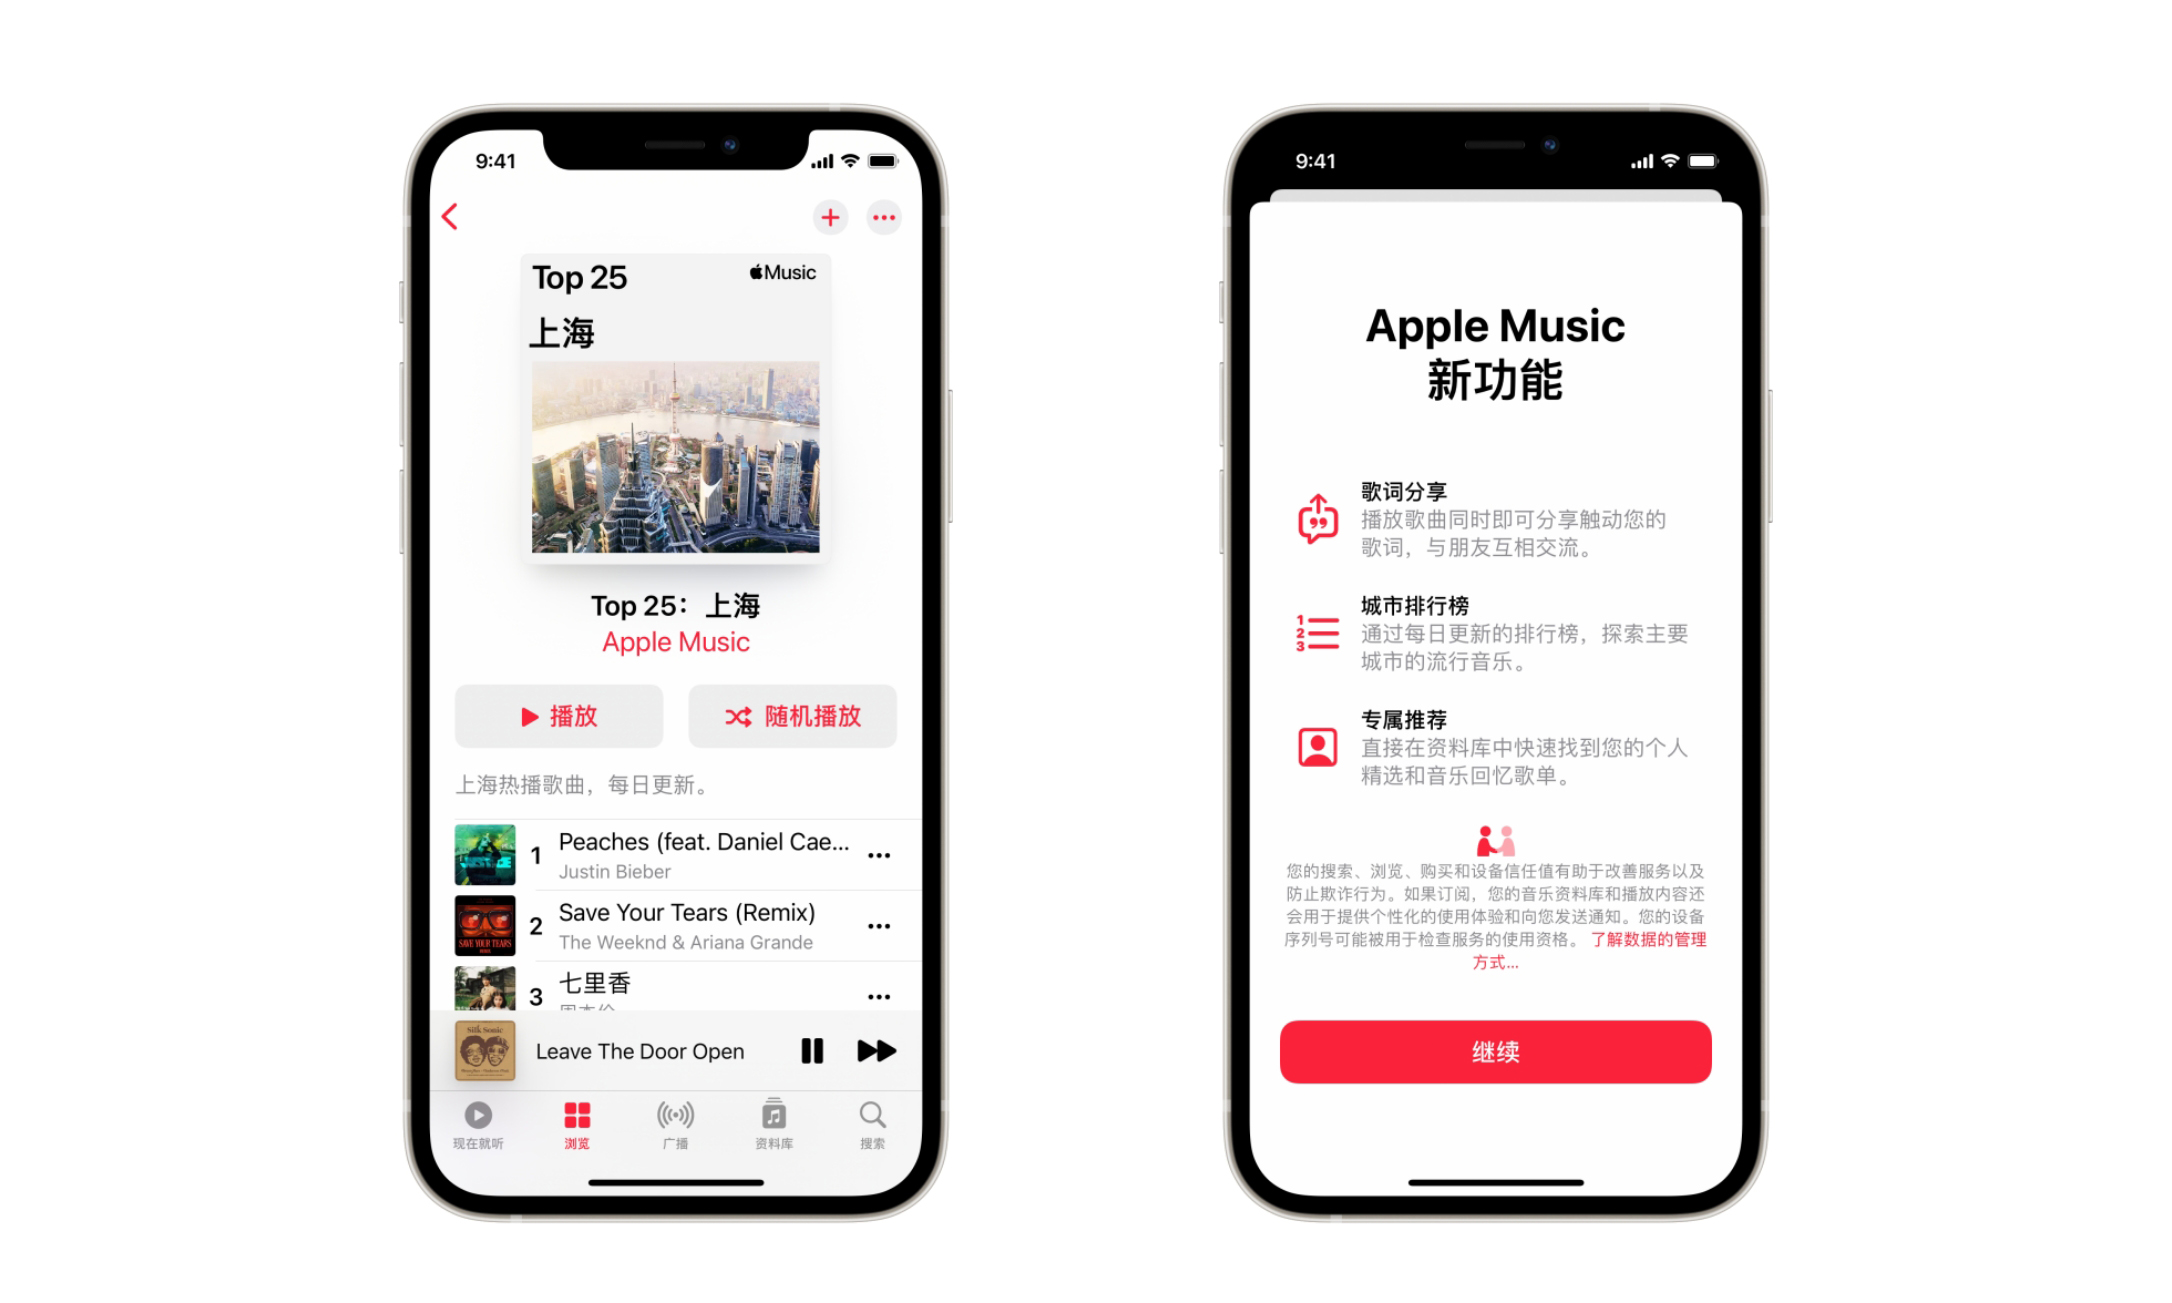 Apple Music 发布「城市排行榜」和多项产品新功能